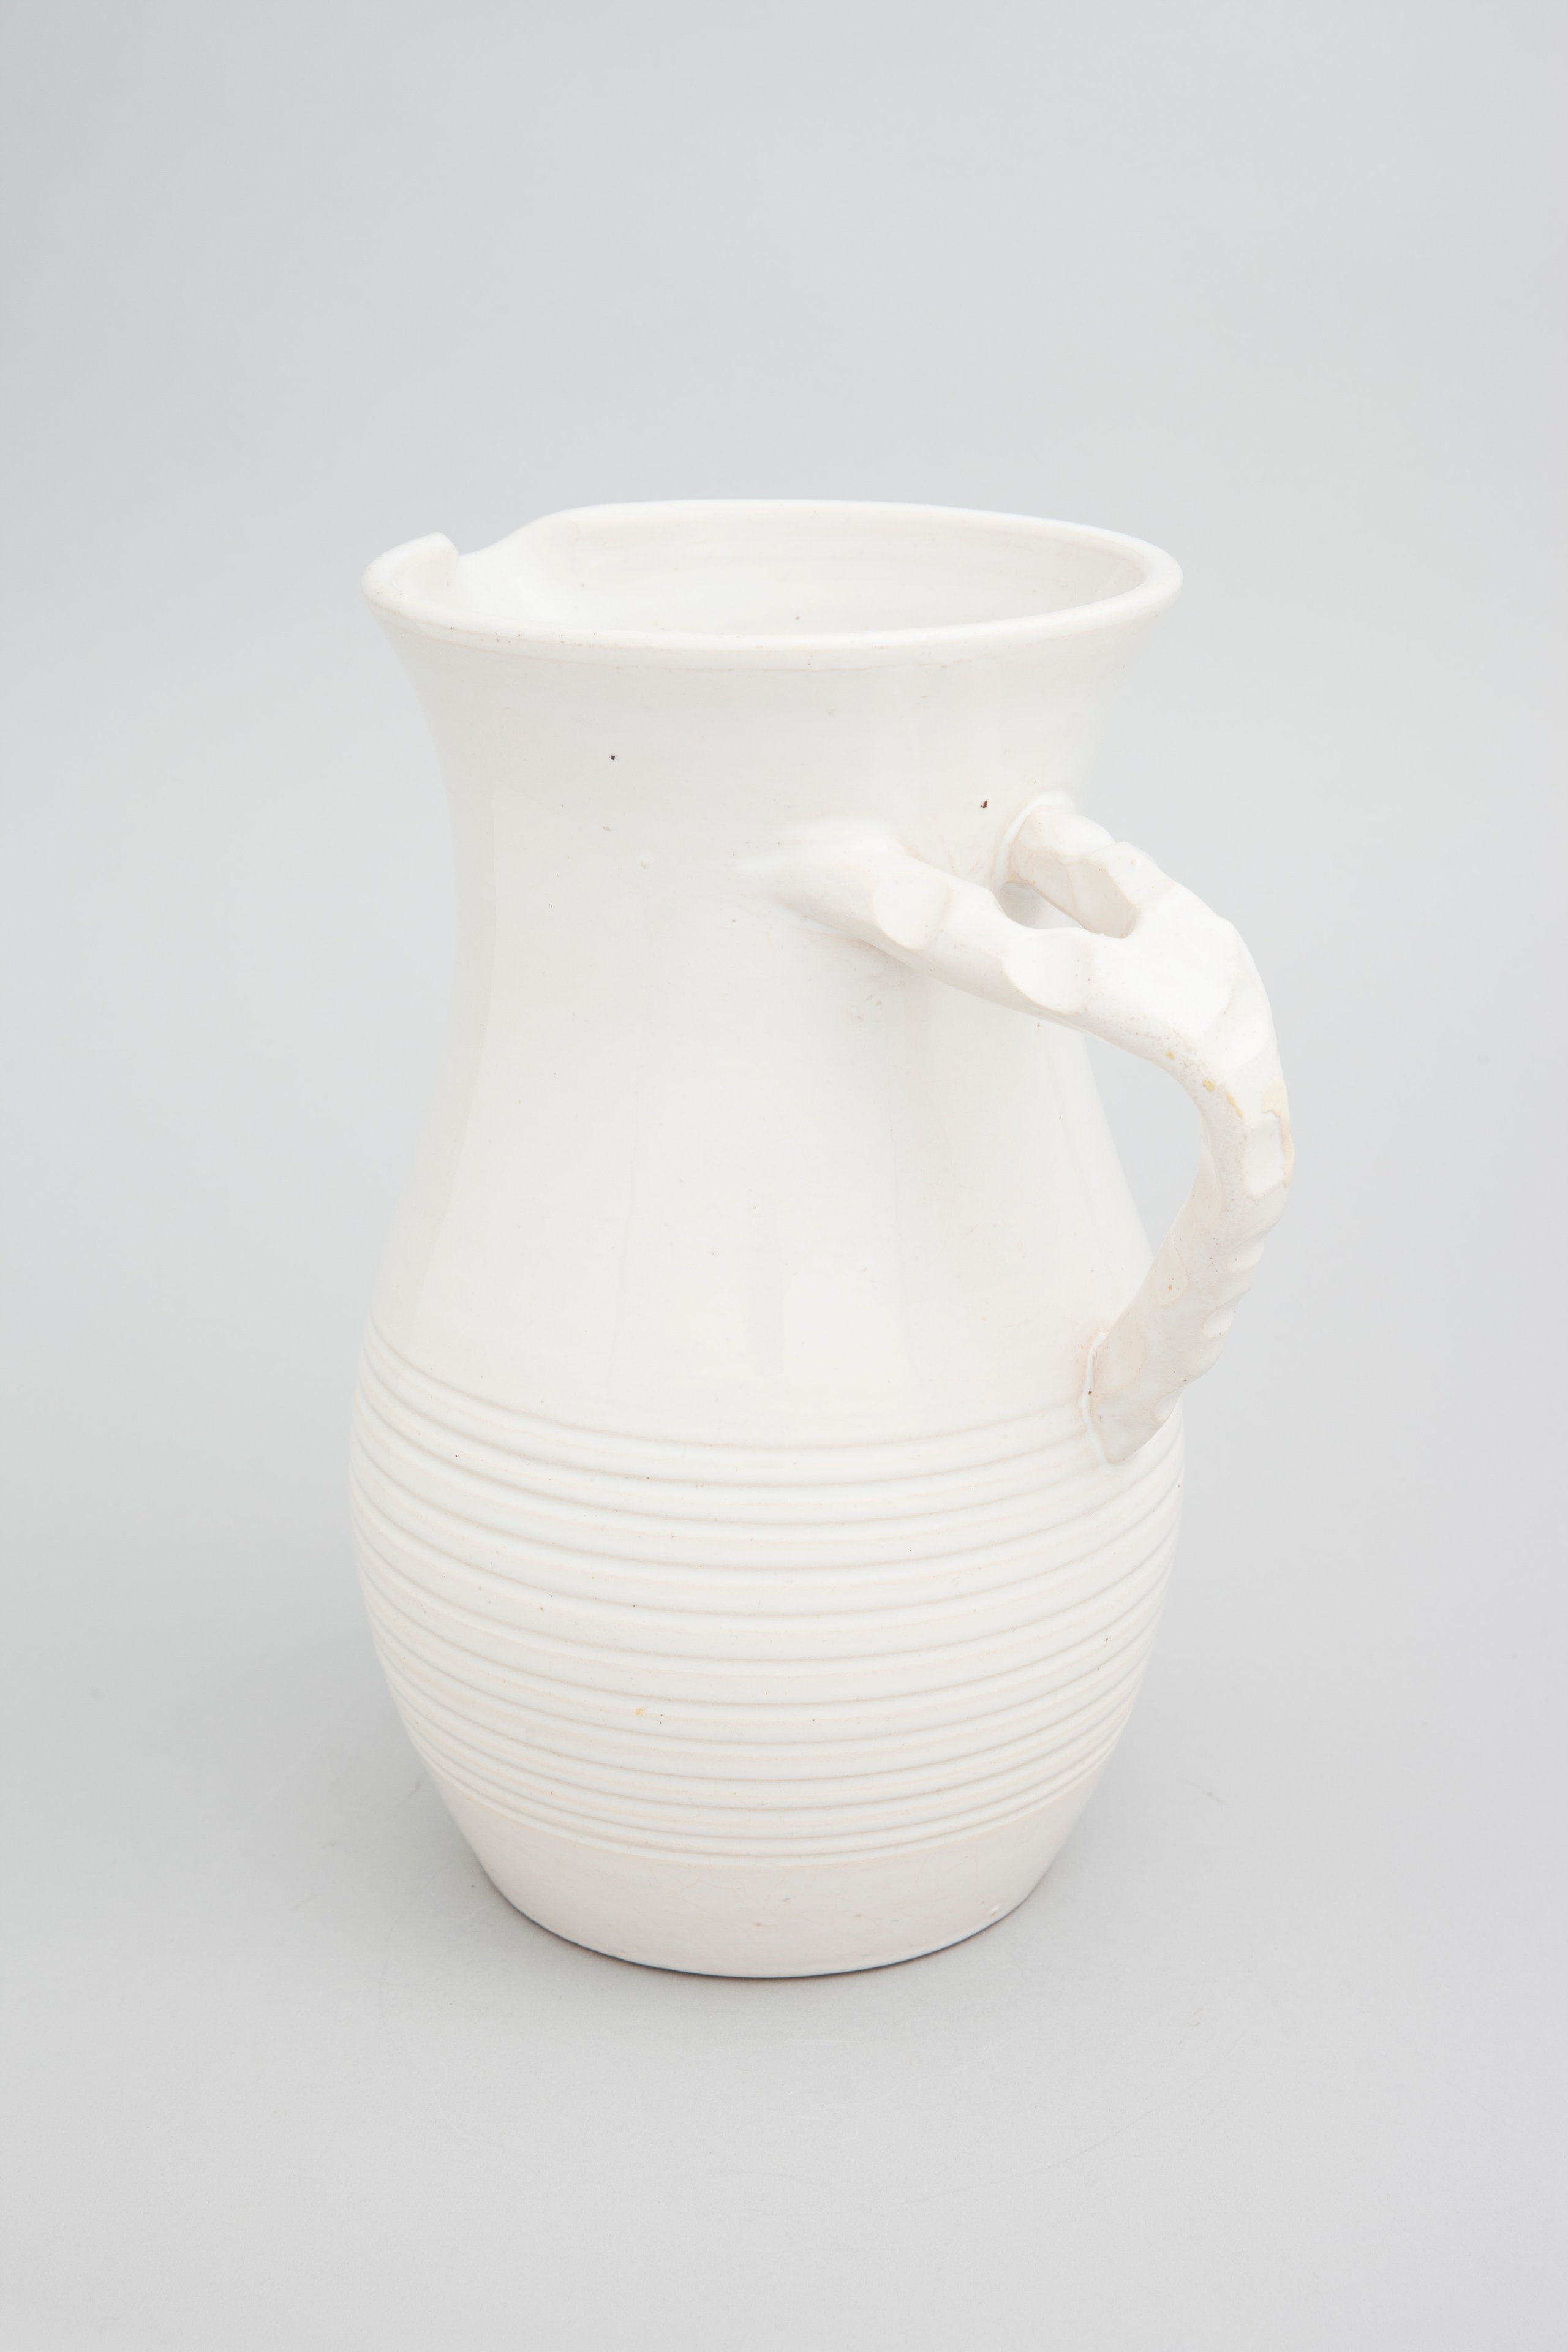 Earthenware vase by Bennett Pottery